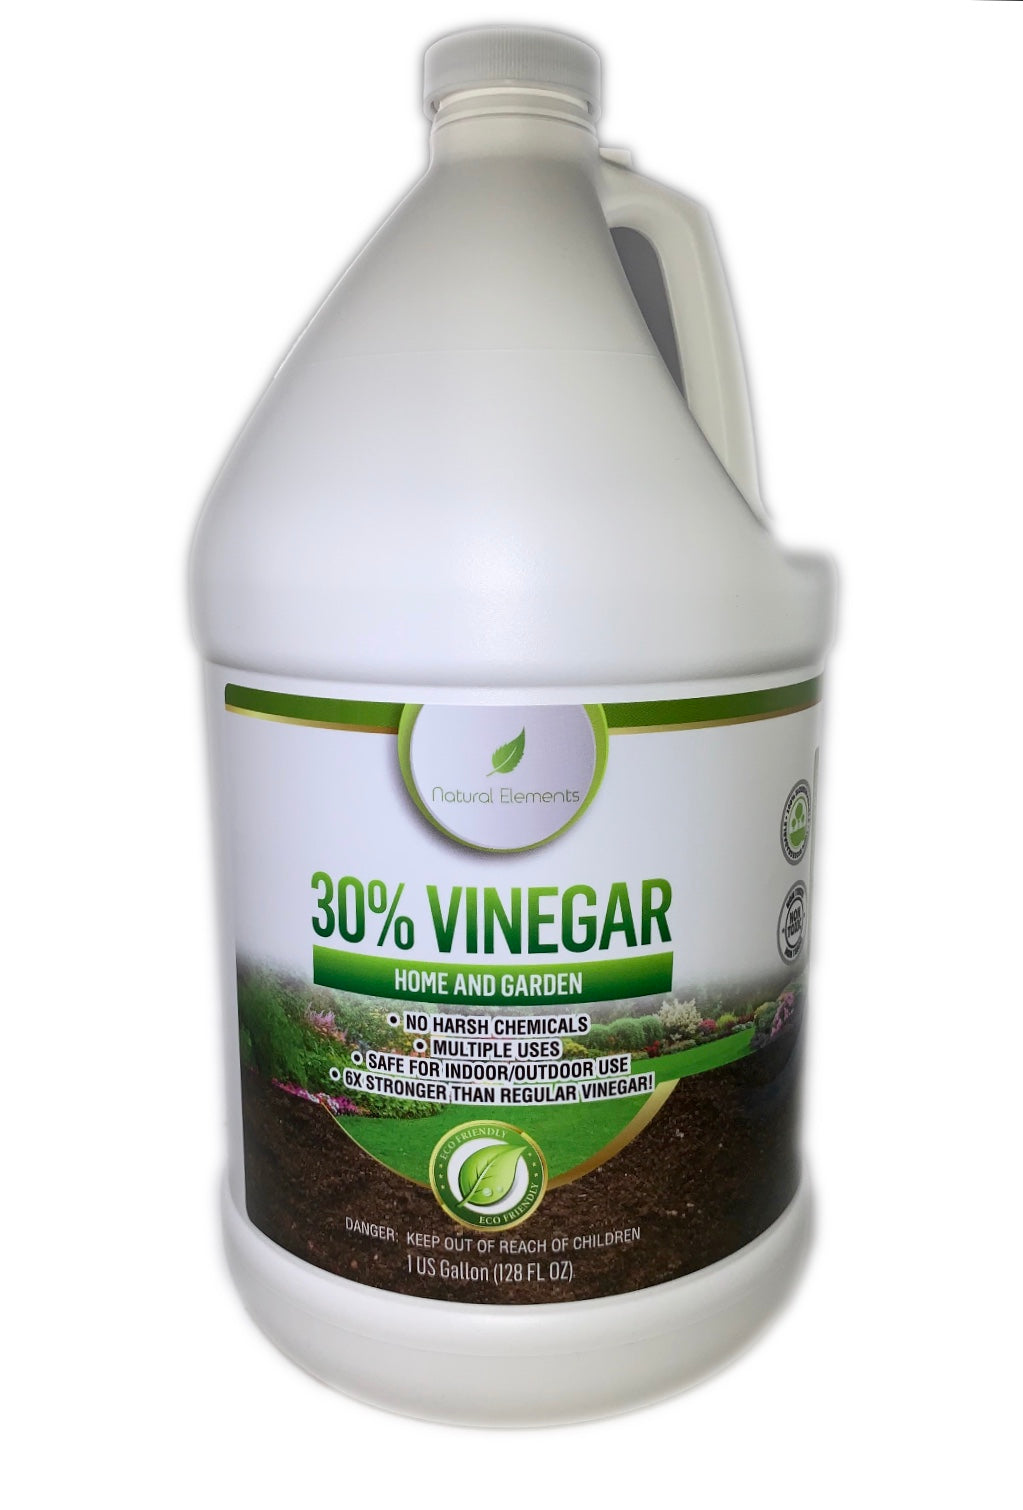 Natural Elements 30% Vinegar, Home and Garden Vinegar